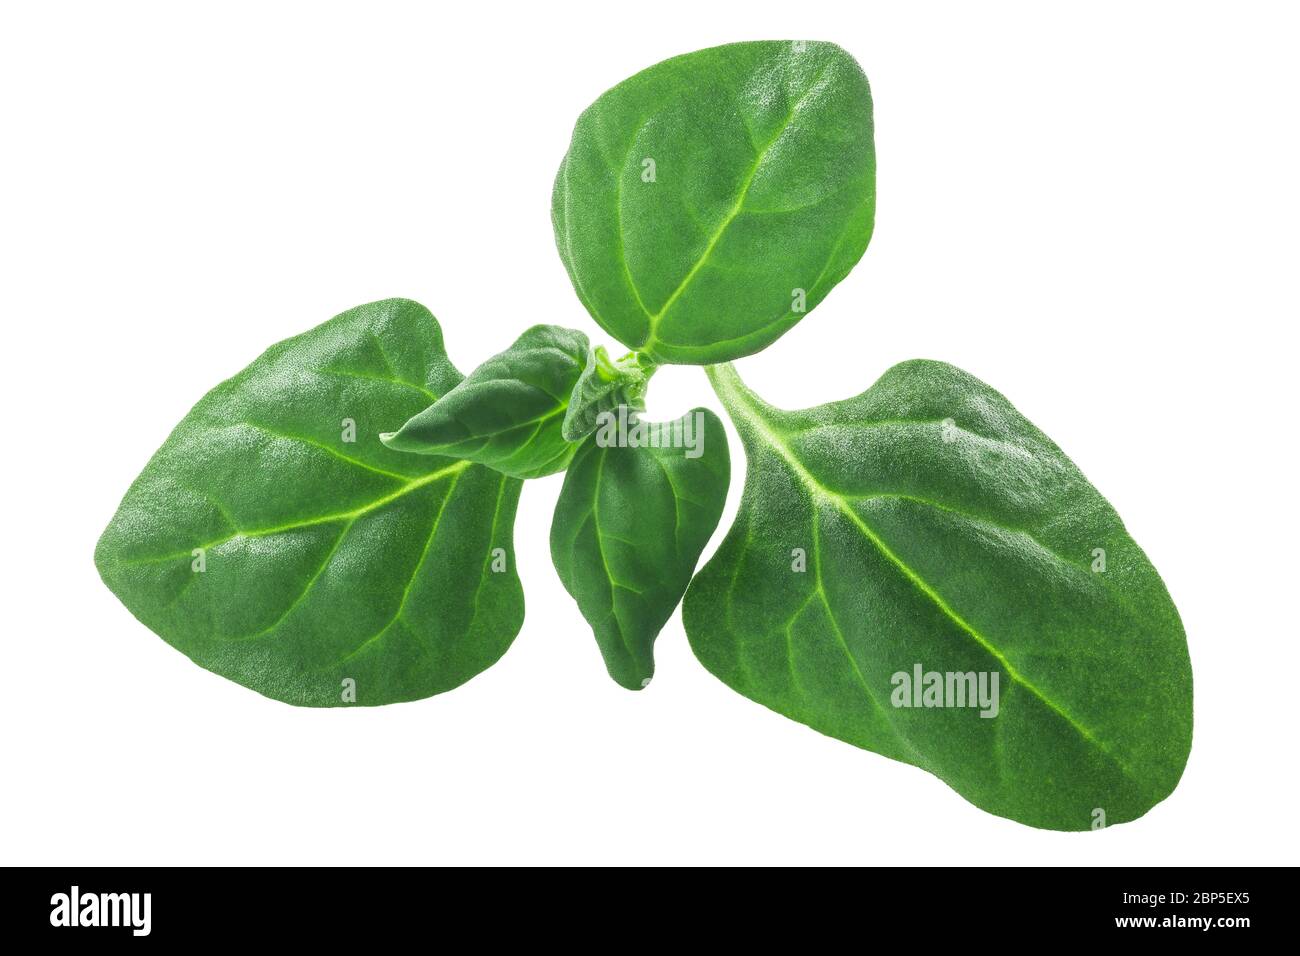 New Zealand Spinach leaves (Tetragonia tetragonoides foliage) isolated Stock Photo